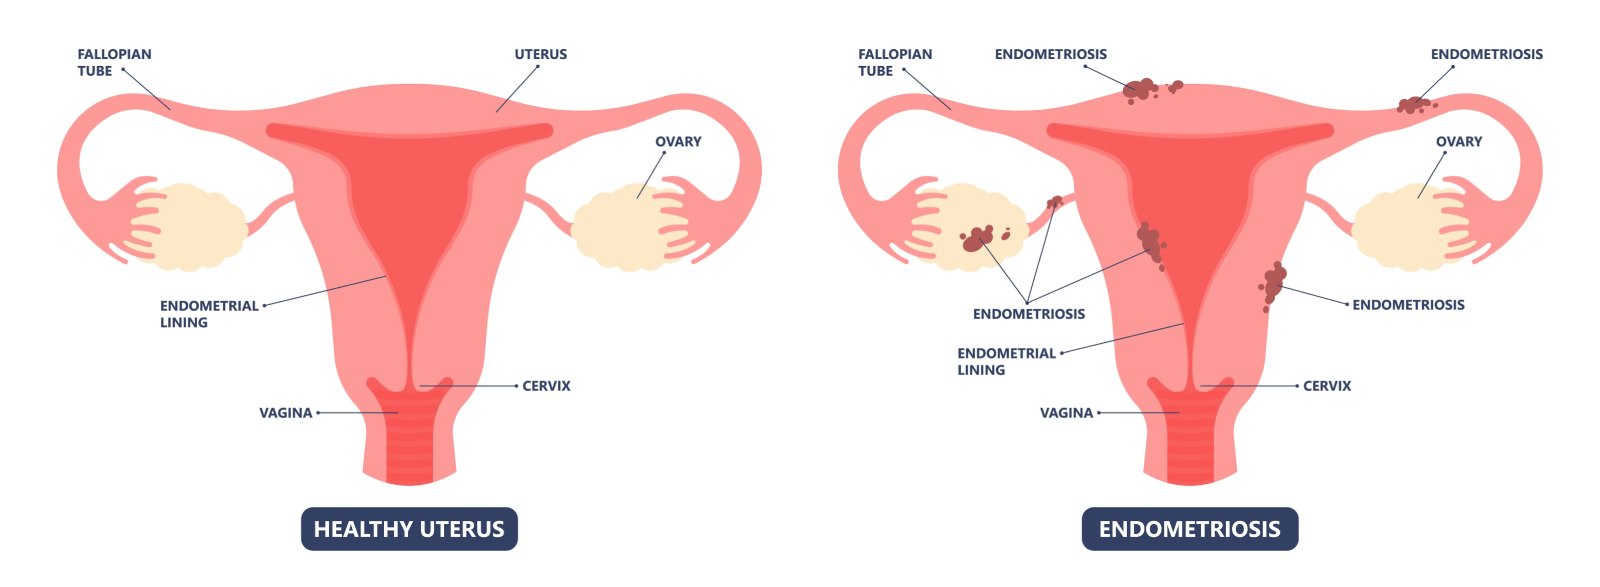 Wer stellt Endometriose fest?